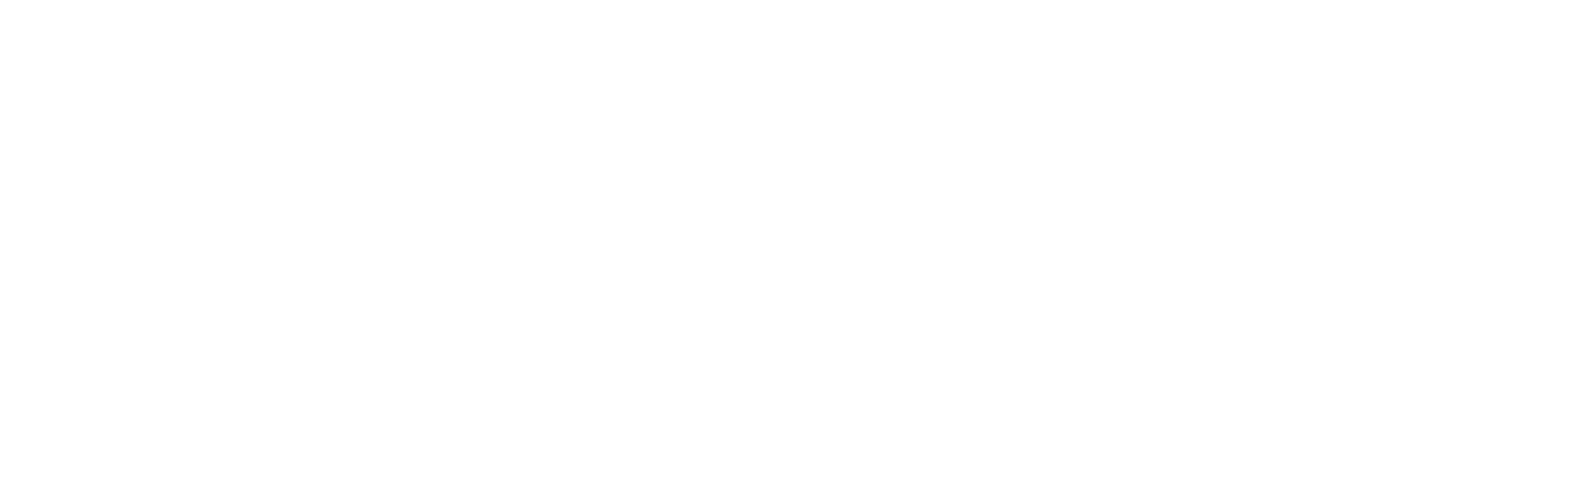 President Chain Store (PSCS) logo pour fonds sombres (PNG transparent)